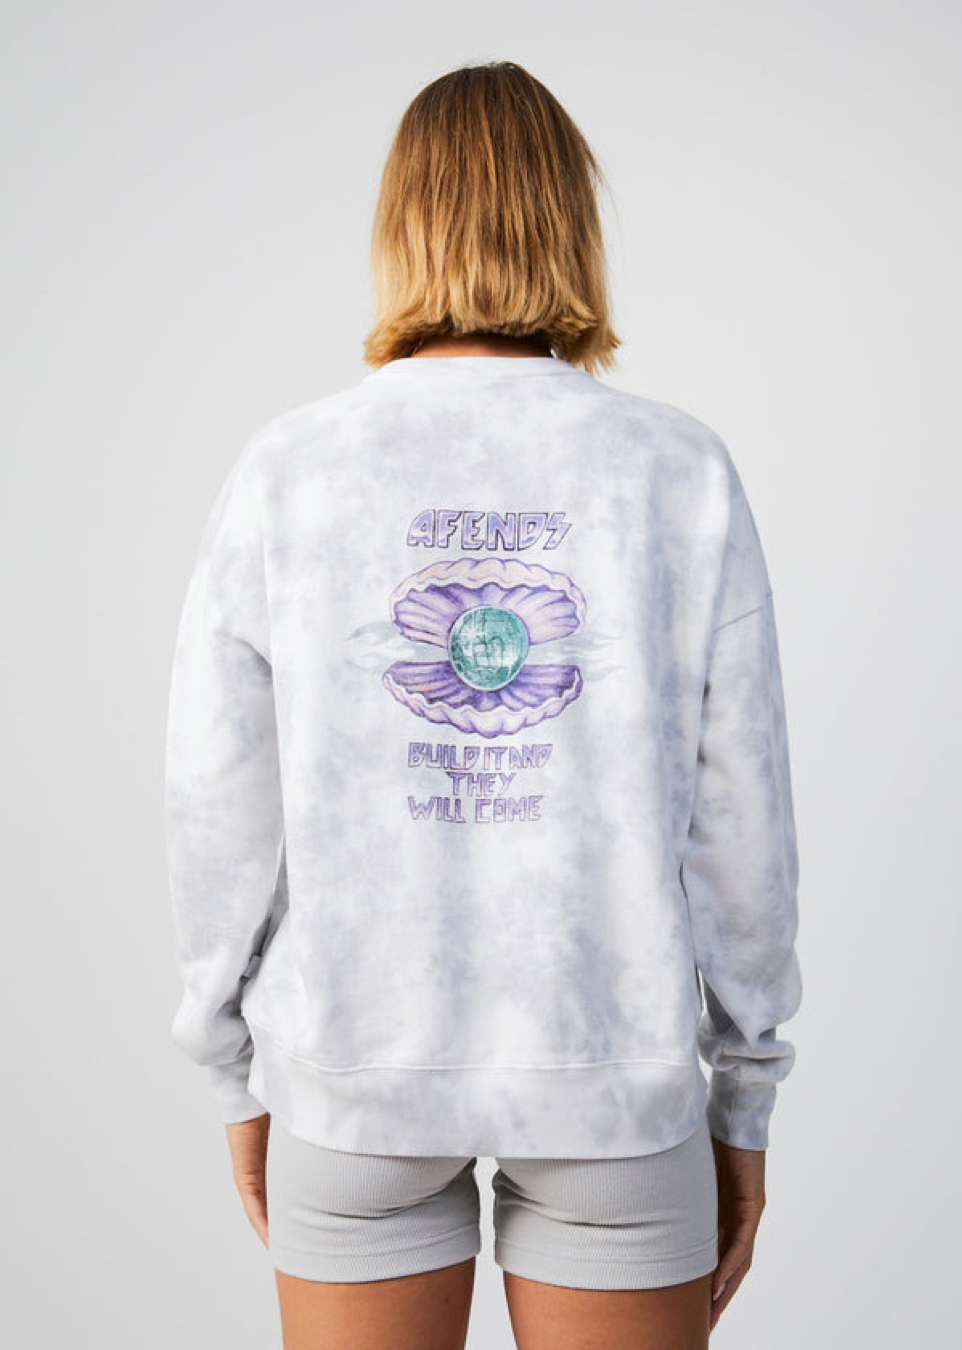 
                  
                    Pearla - Hemp Crew Neck Graphic Sweater / Smoke Wash
                  
                